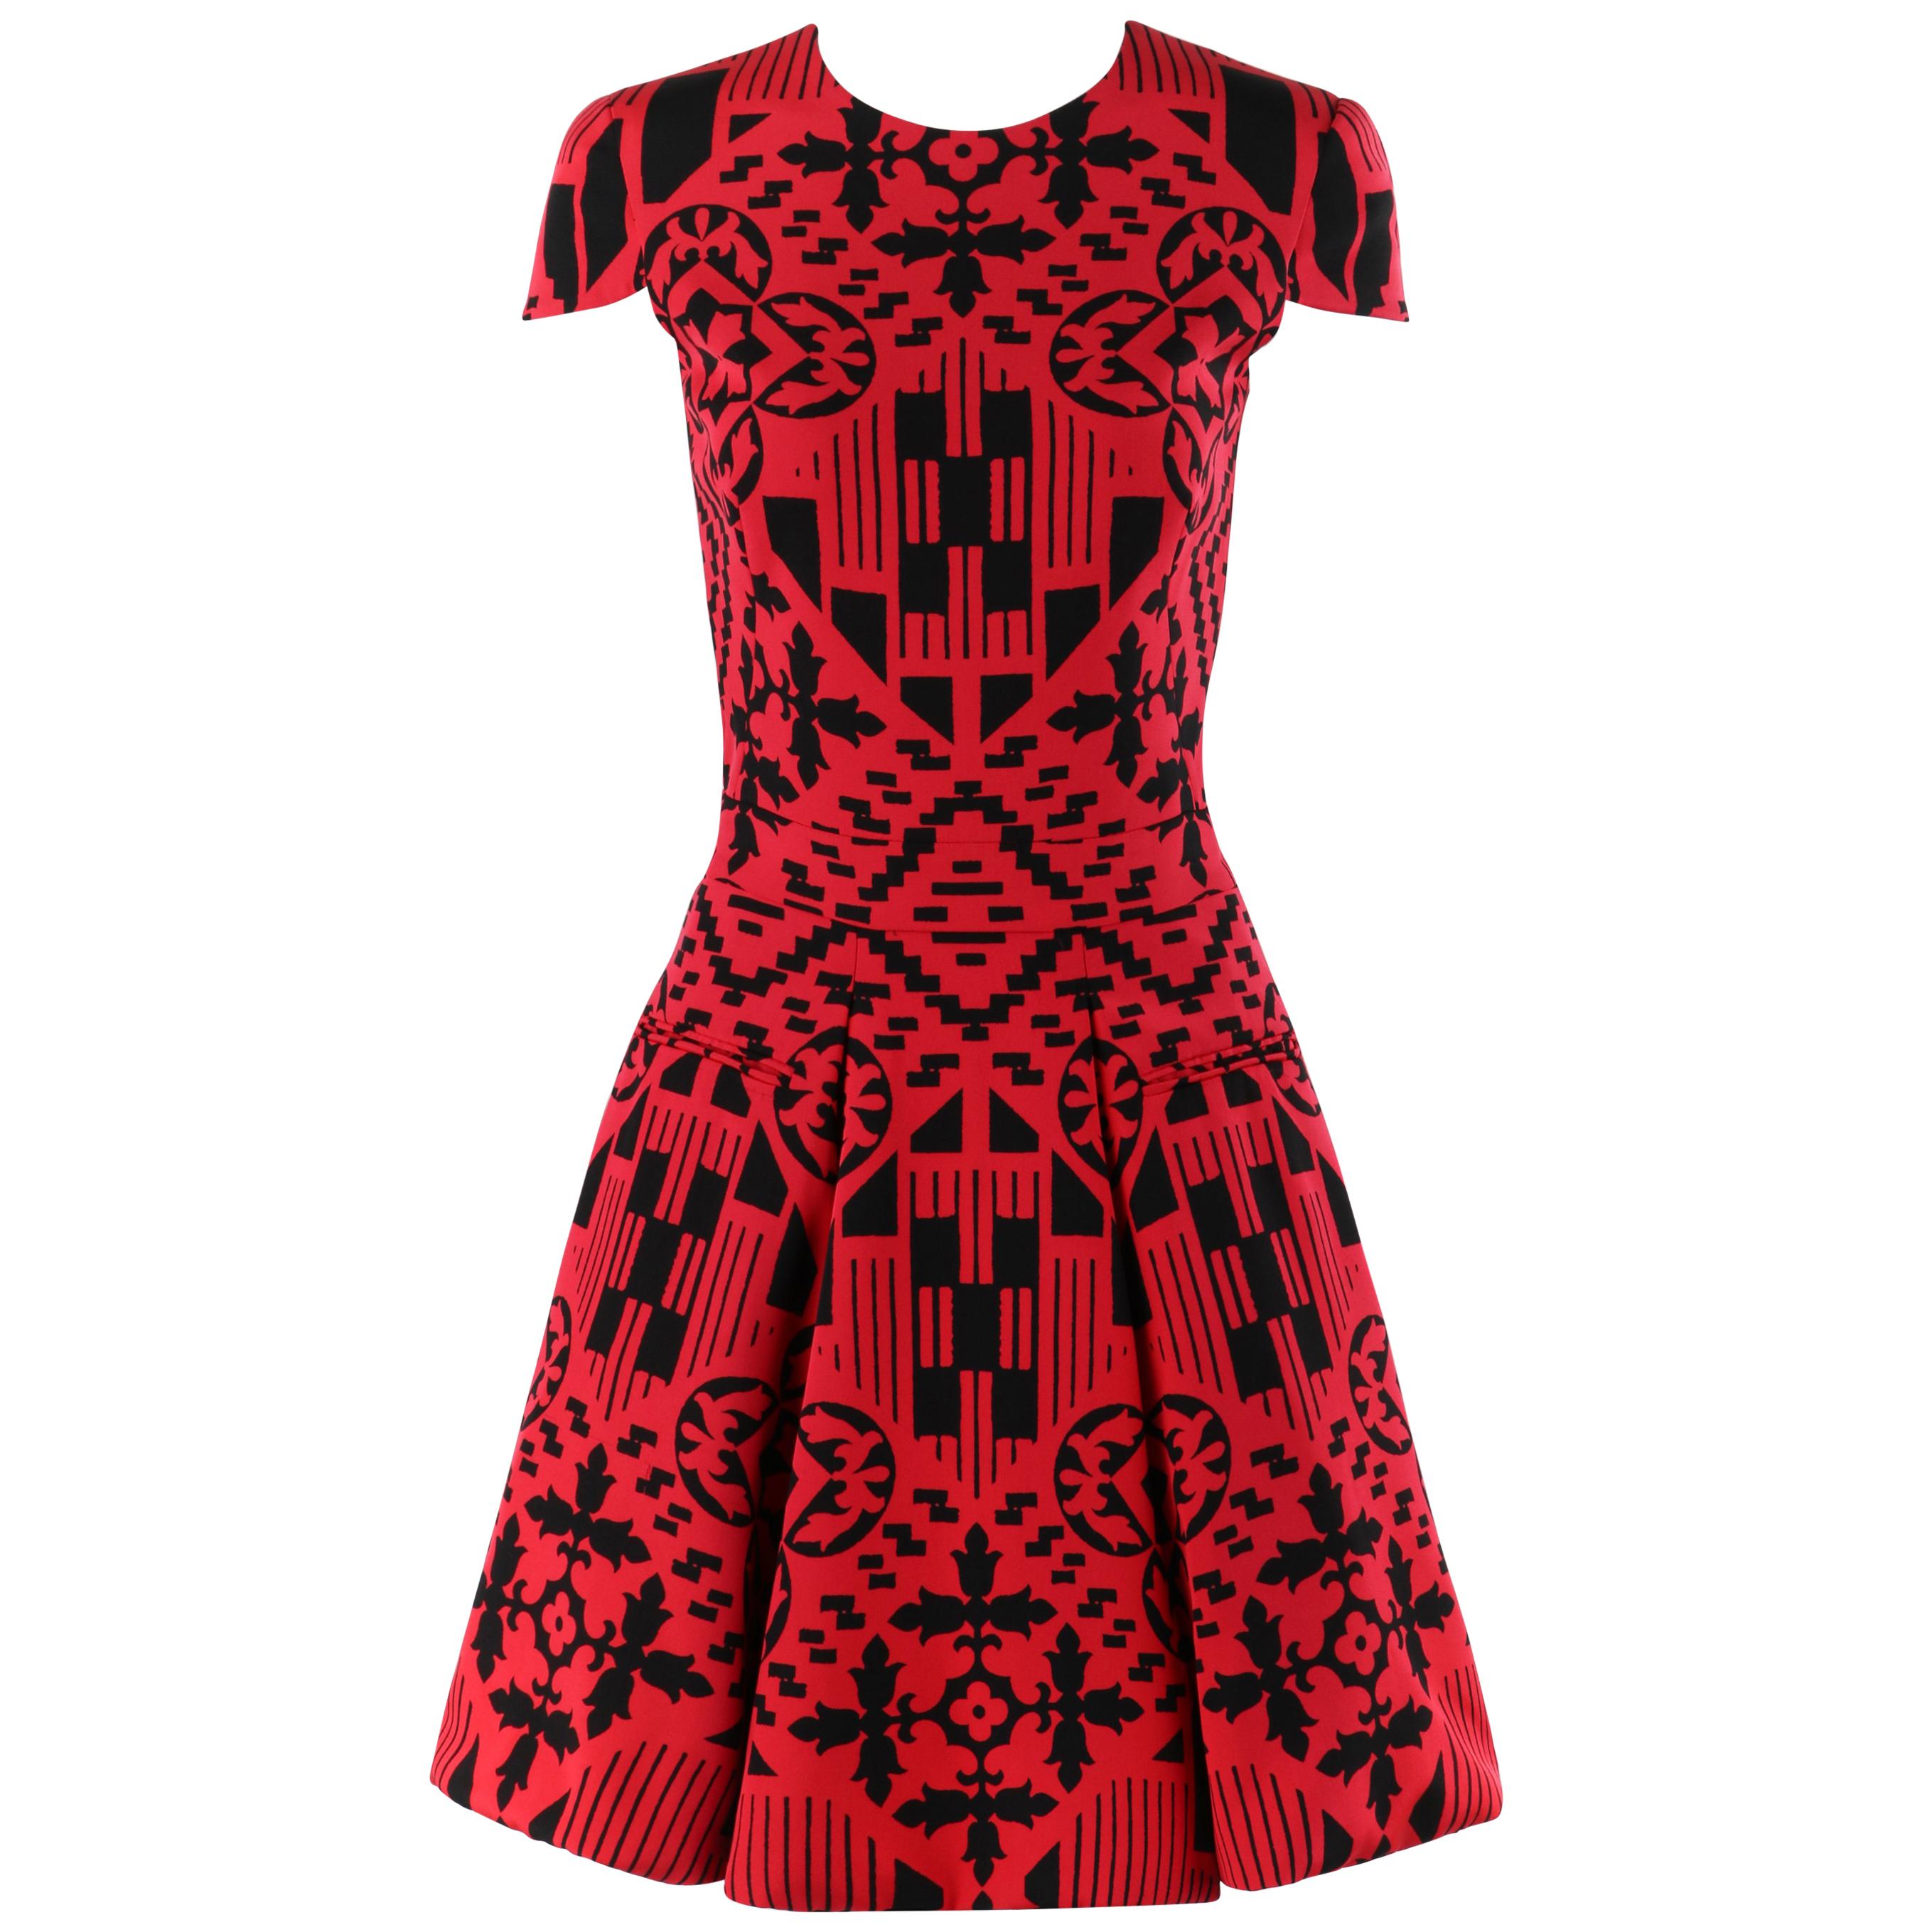 ALEXANDER McQUEEN S/S 2014 Red Black Mosaic Shape Print Fit N Flare Skater Dress